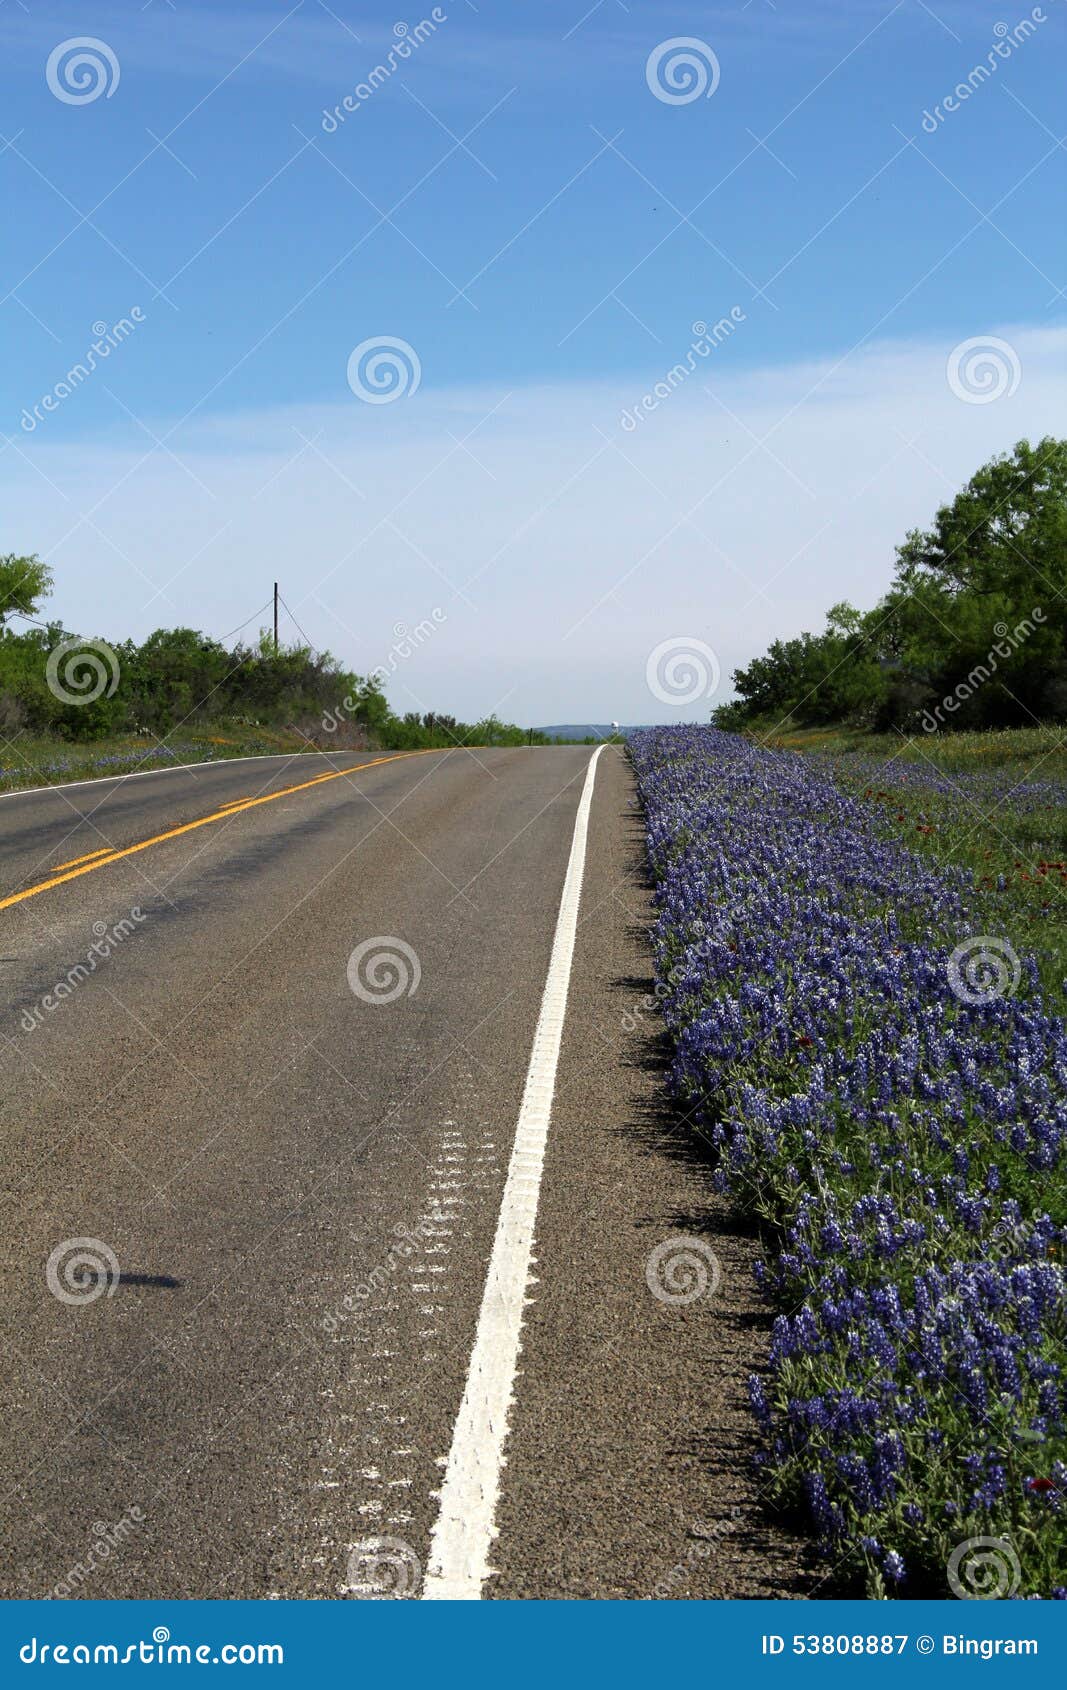 texas highway in spring